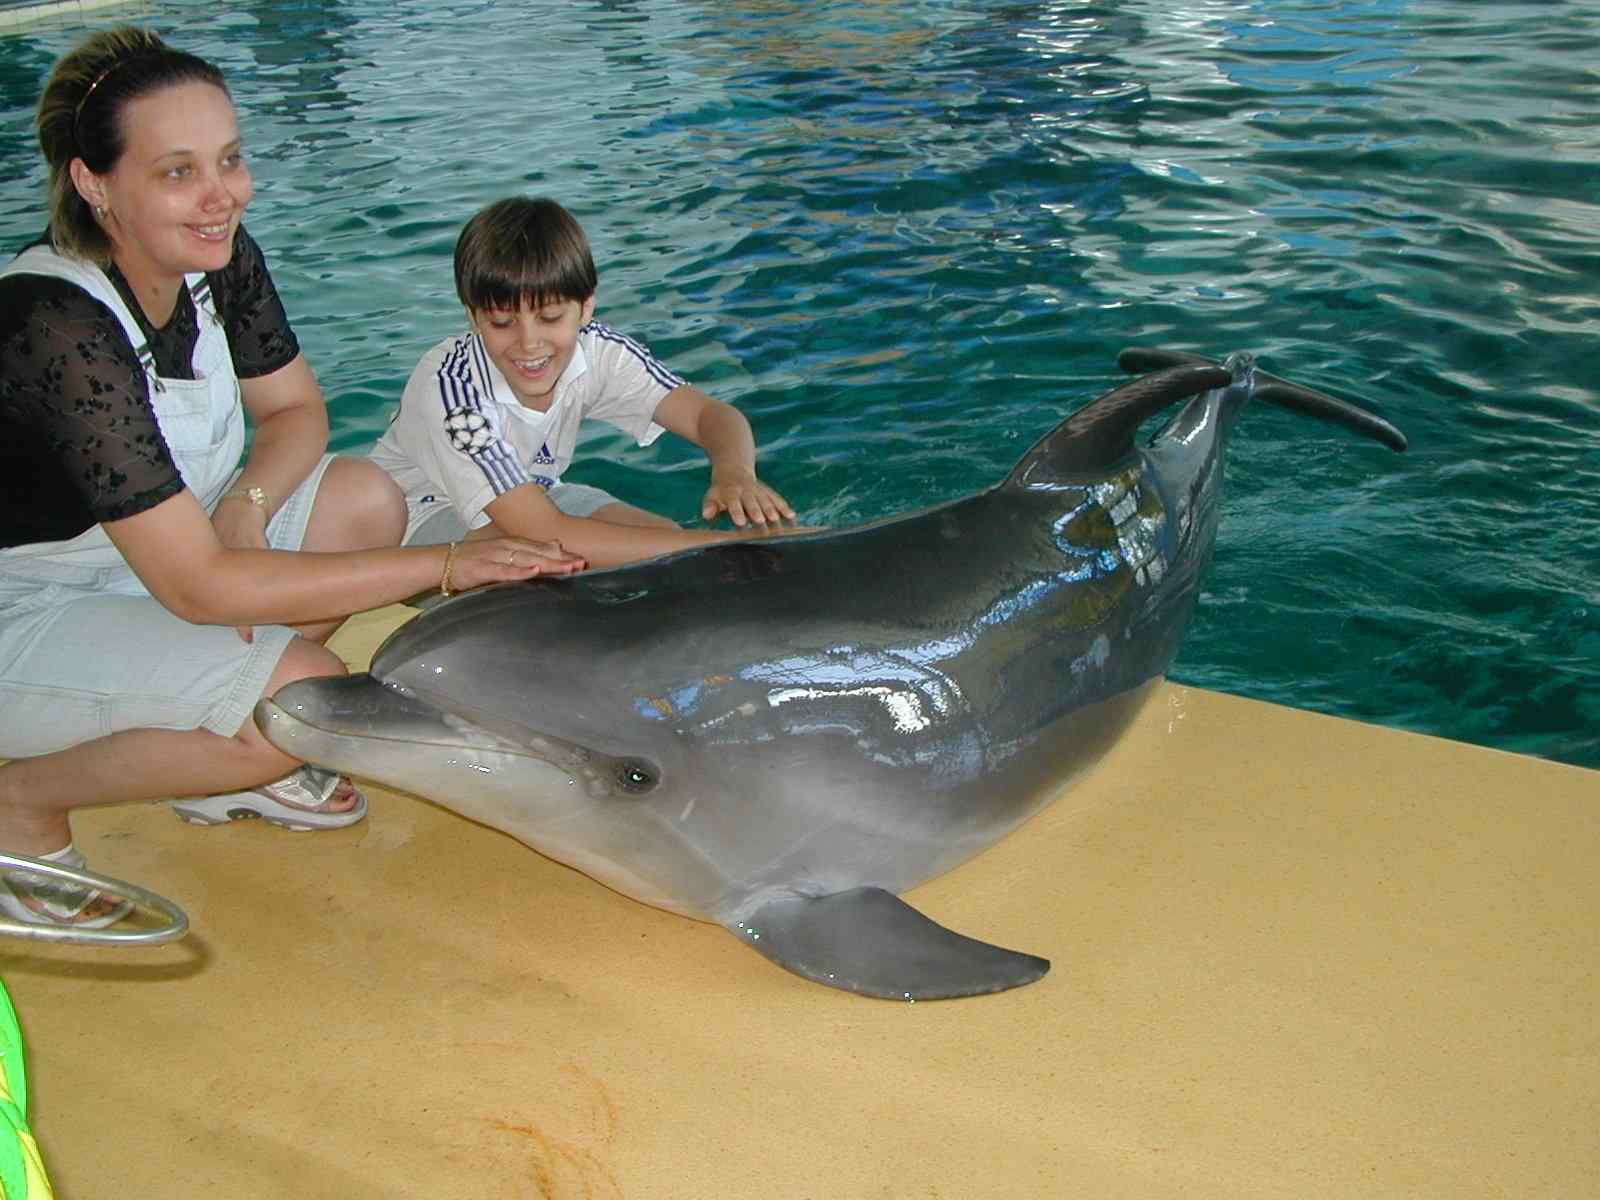 Фото дельфина